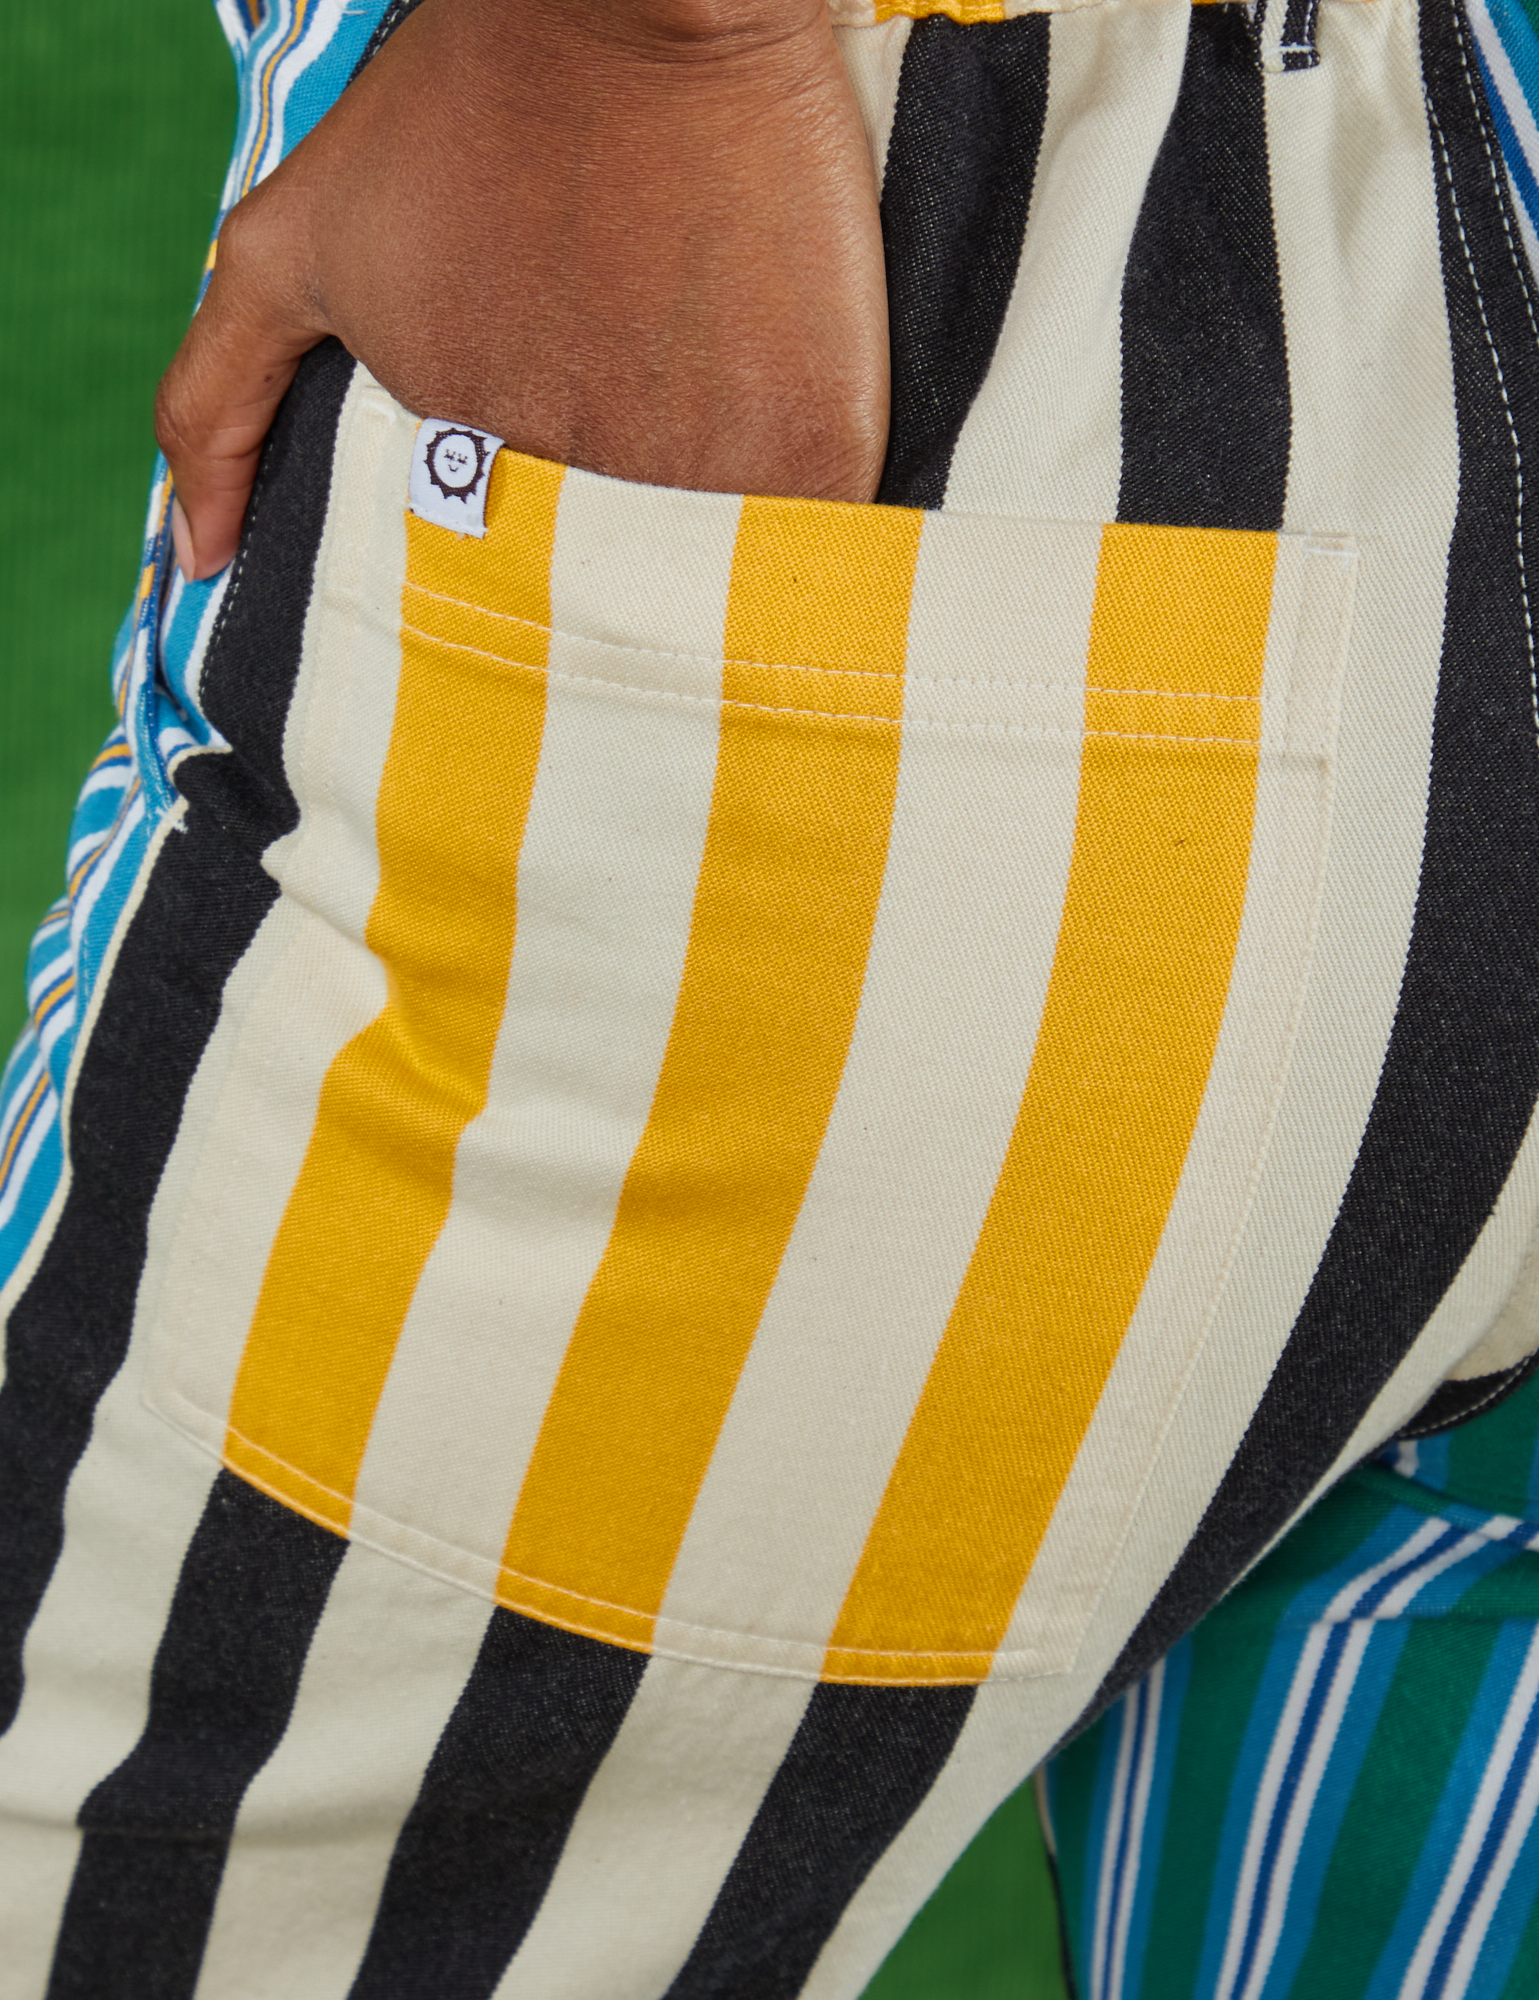 Mismatched Stripe Work Pants back pocket close up. Kandia has her hand in the pocket.